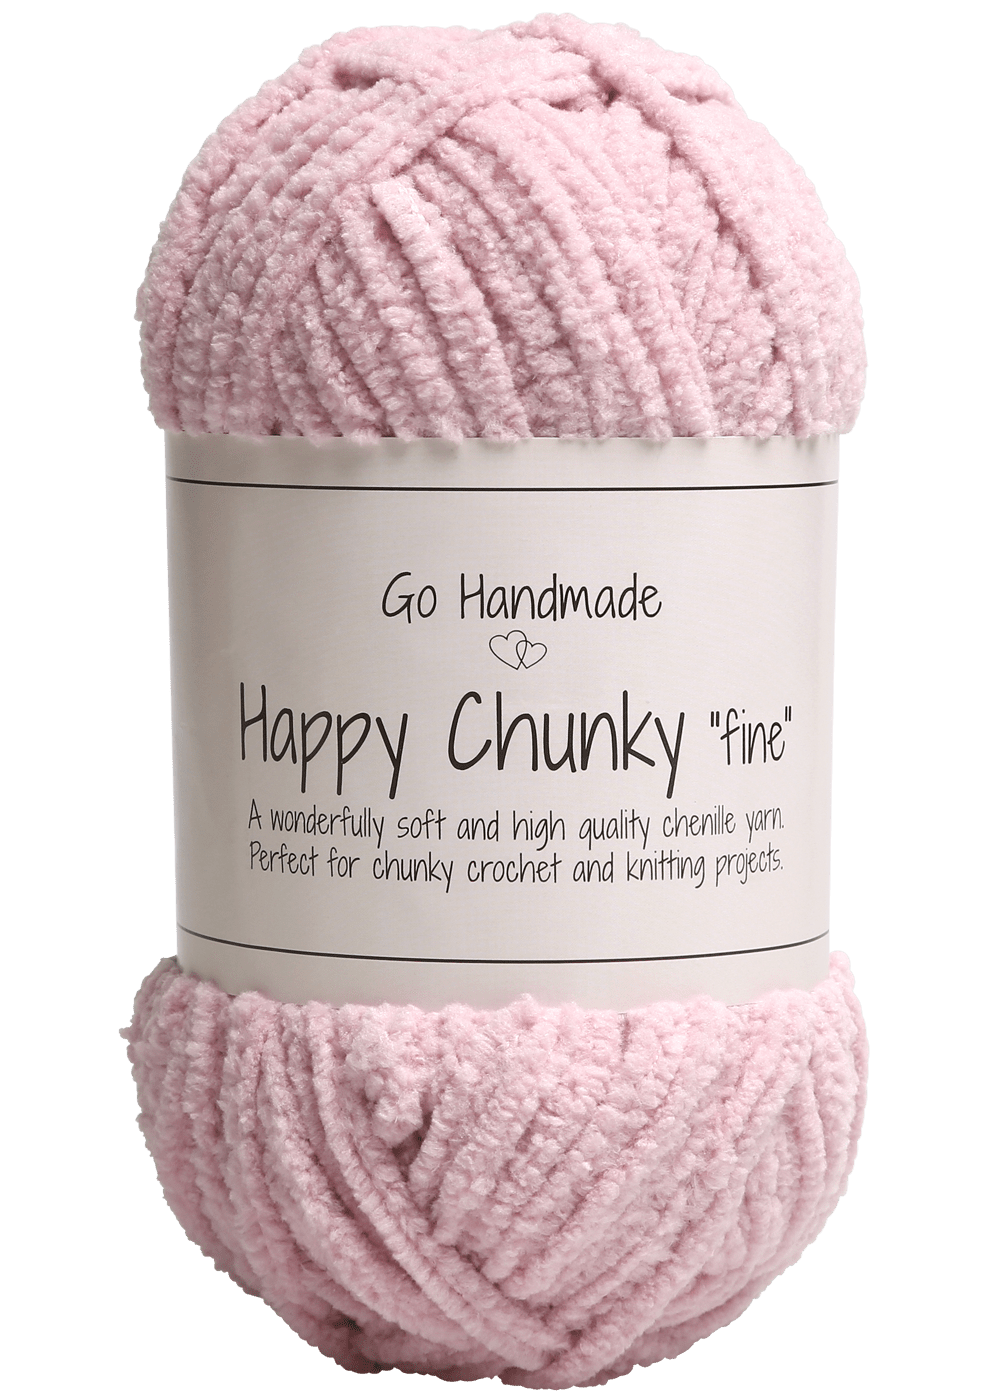 Go Handmade Happy Chunky Fine - Old rose